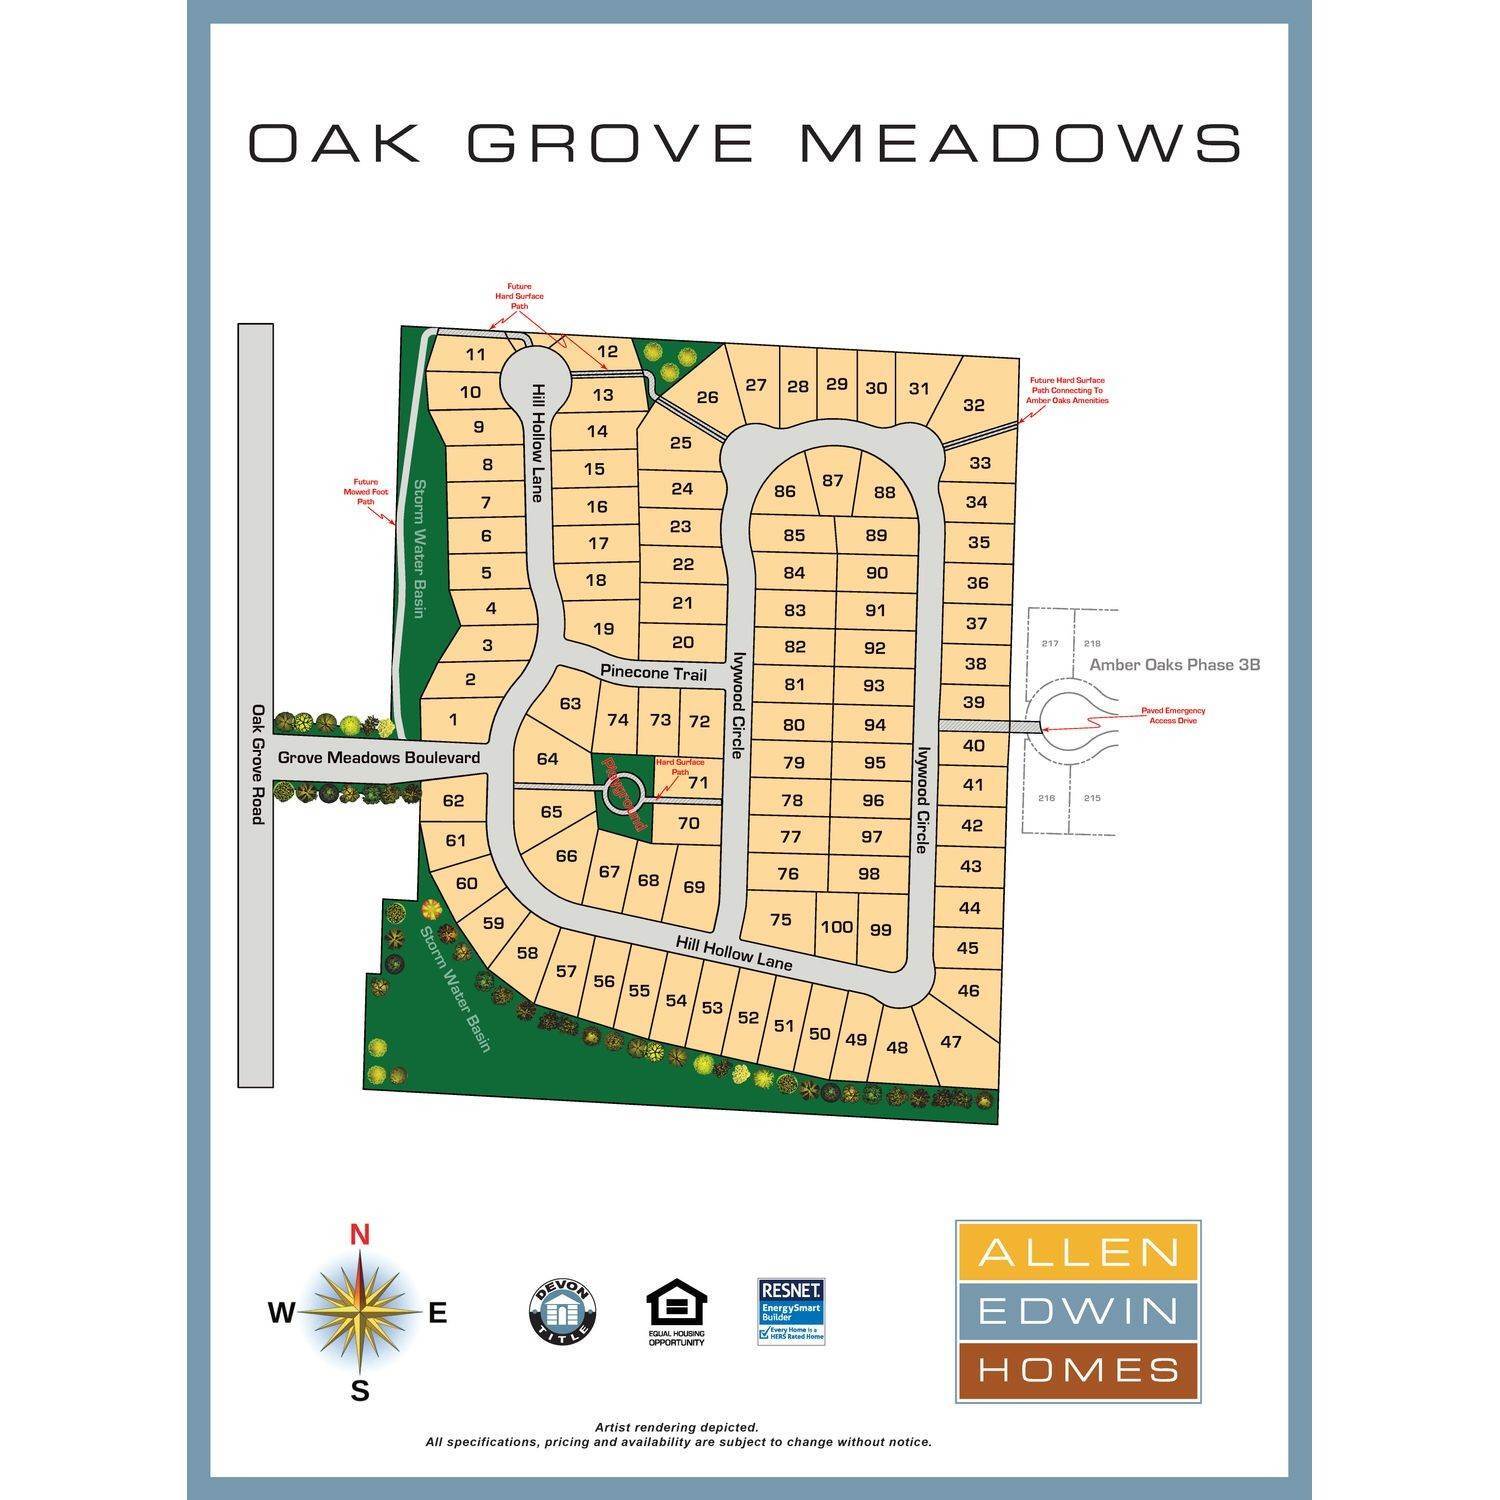 2. Oak Grove Meadows building at 3260 Hill Hollow Lane, Howell, MI 48855